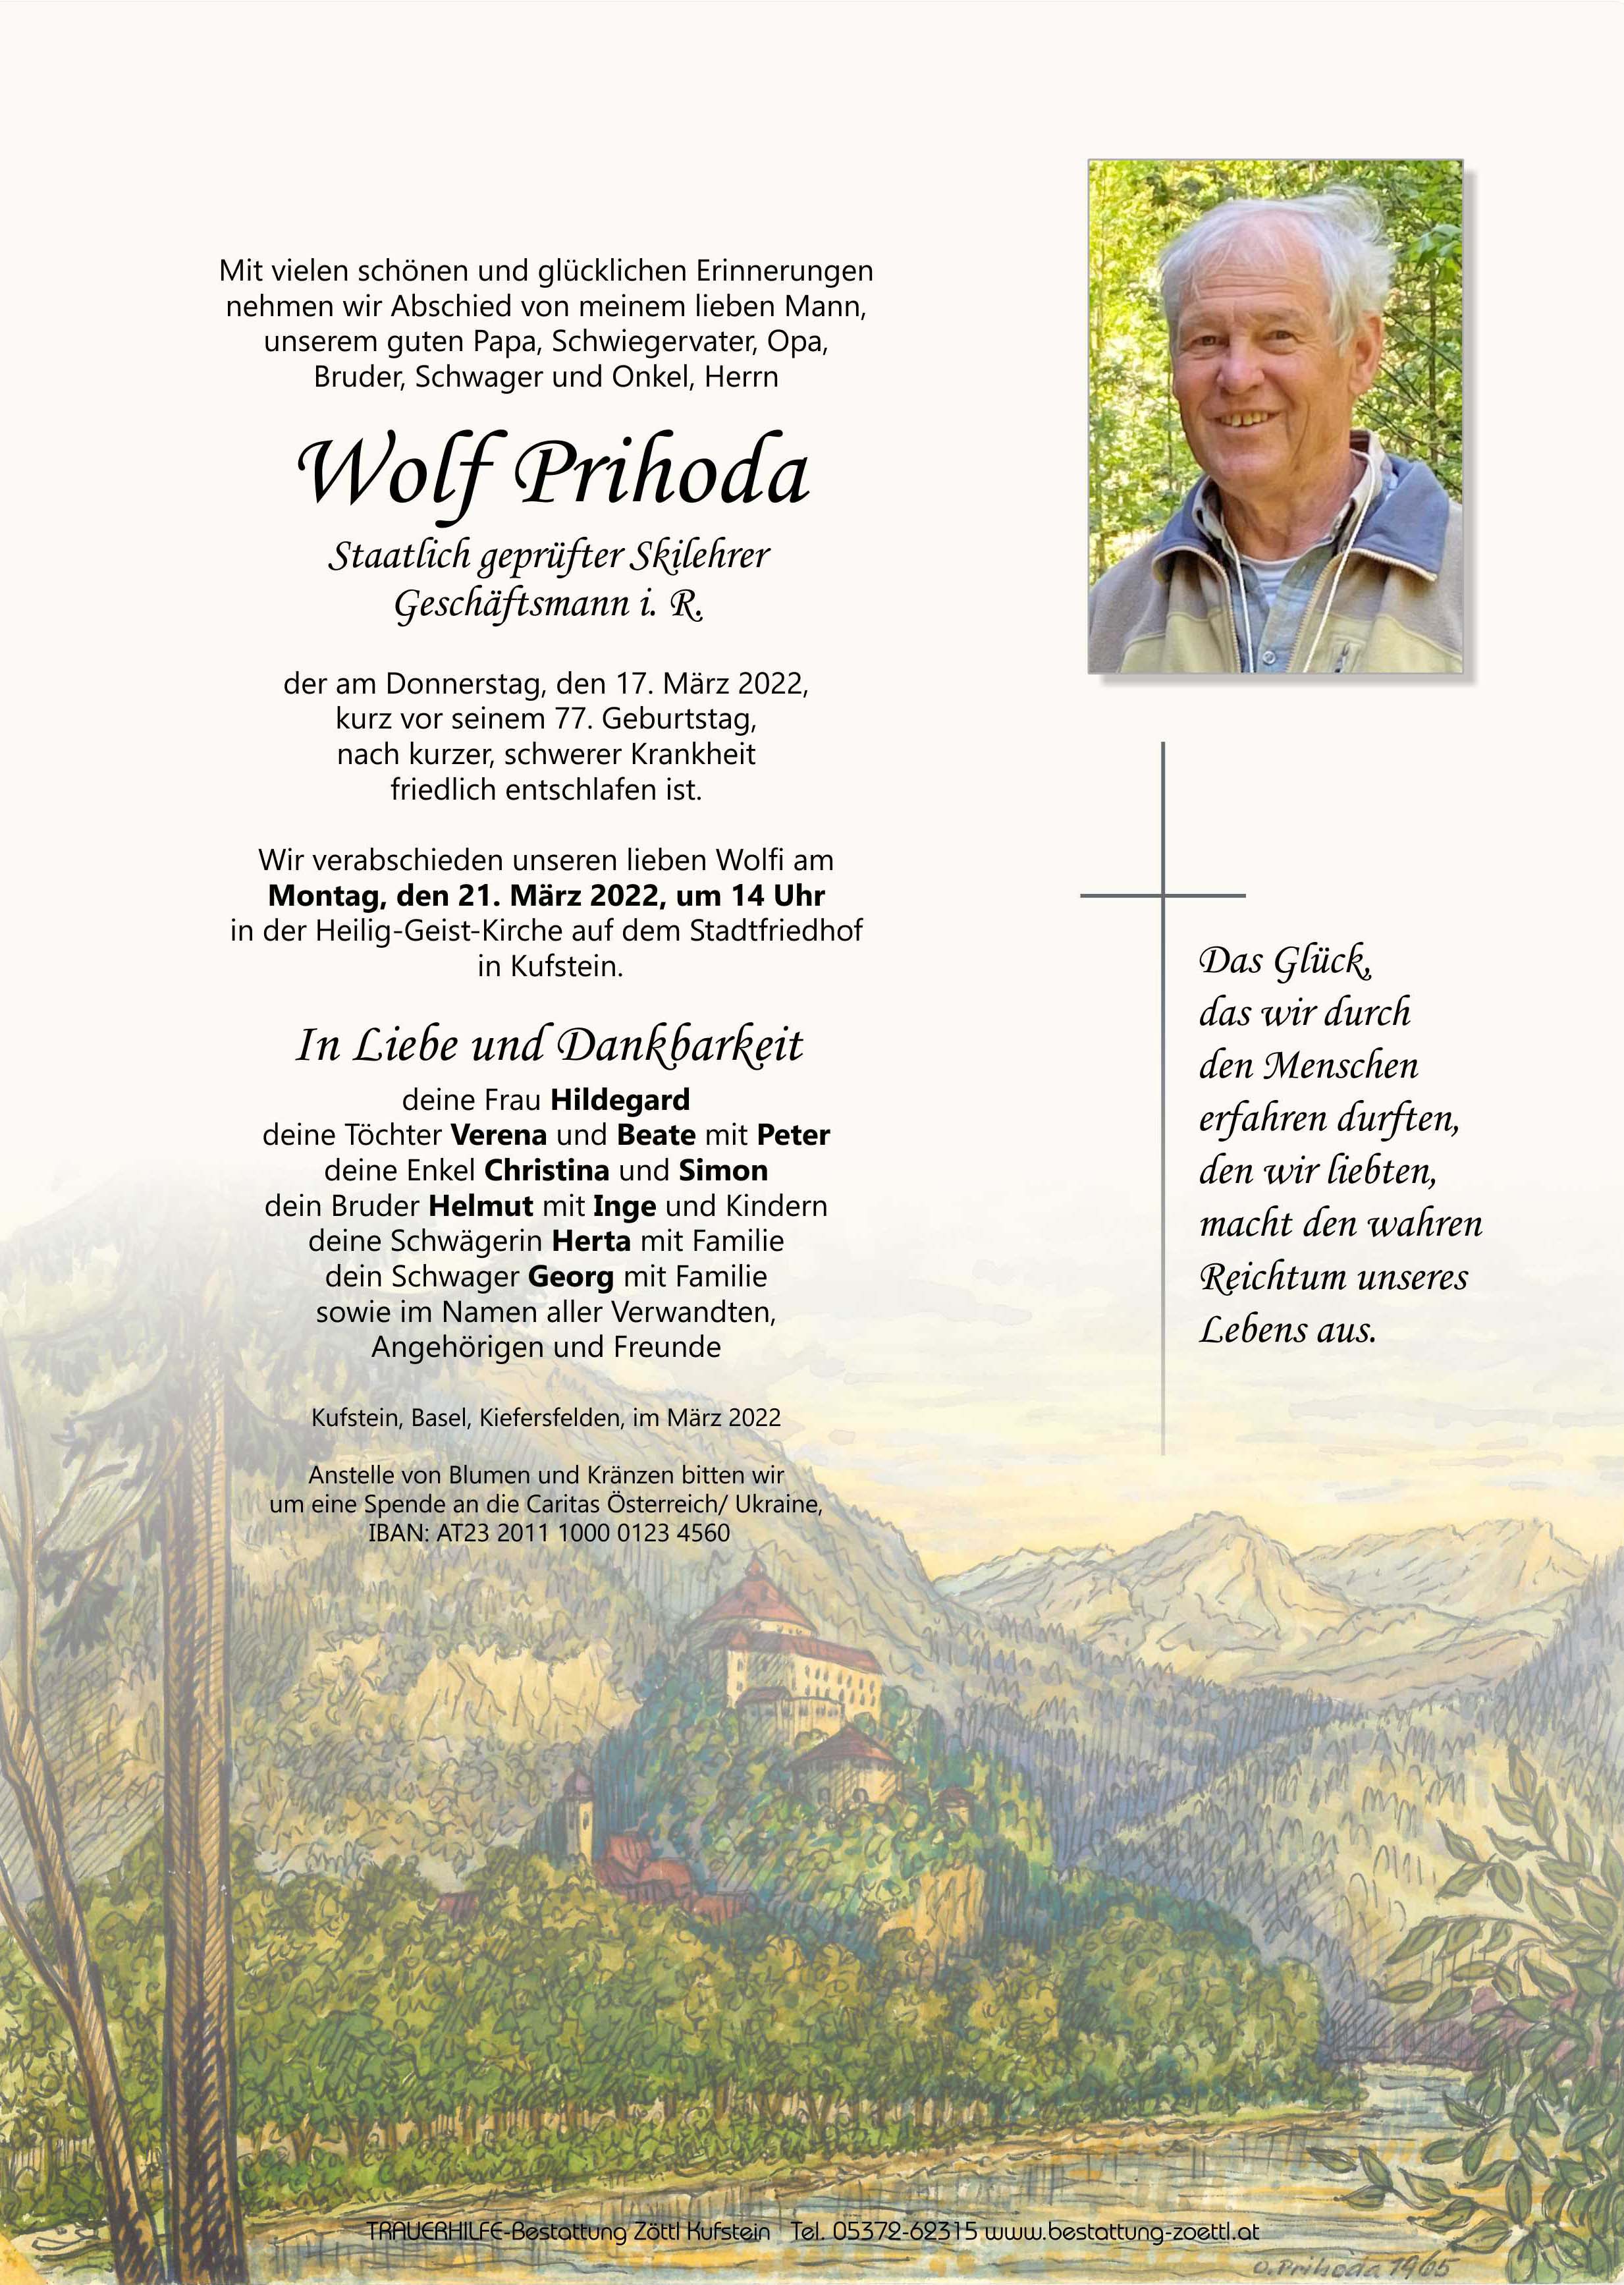 Wolf Prihoda